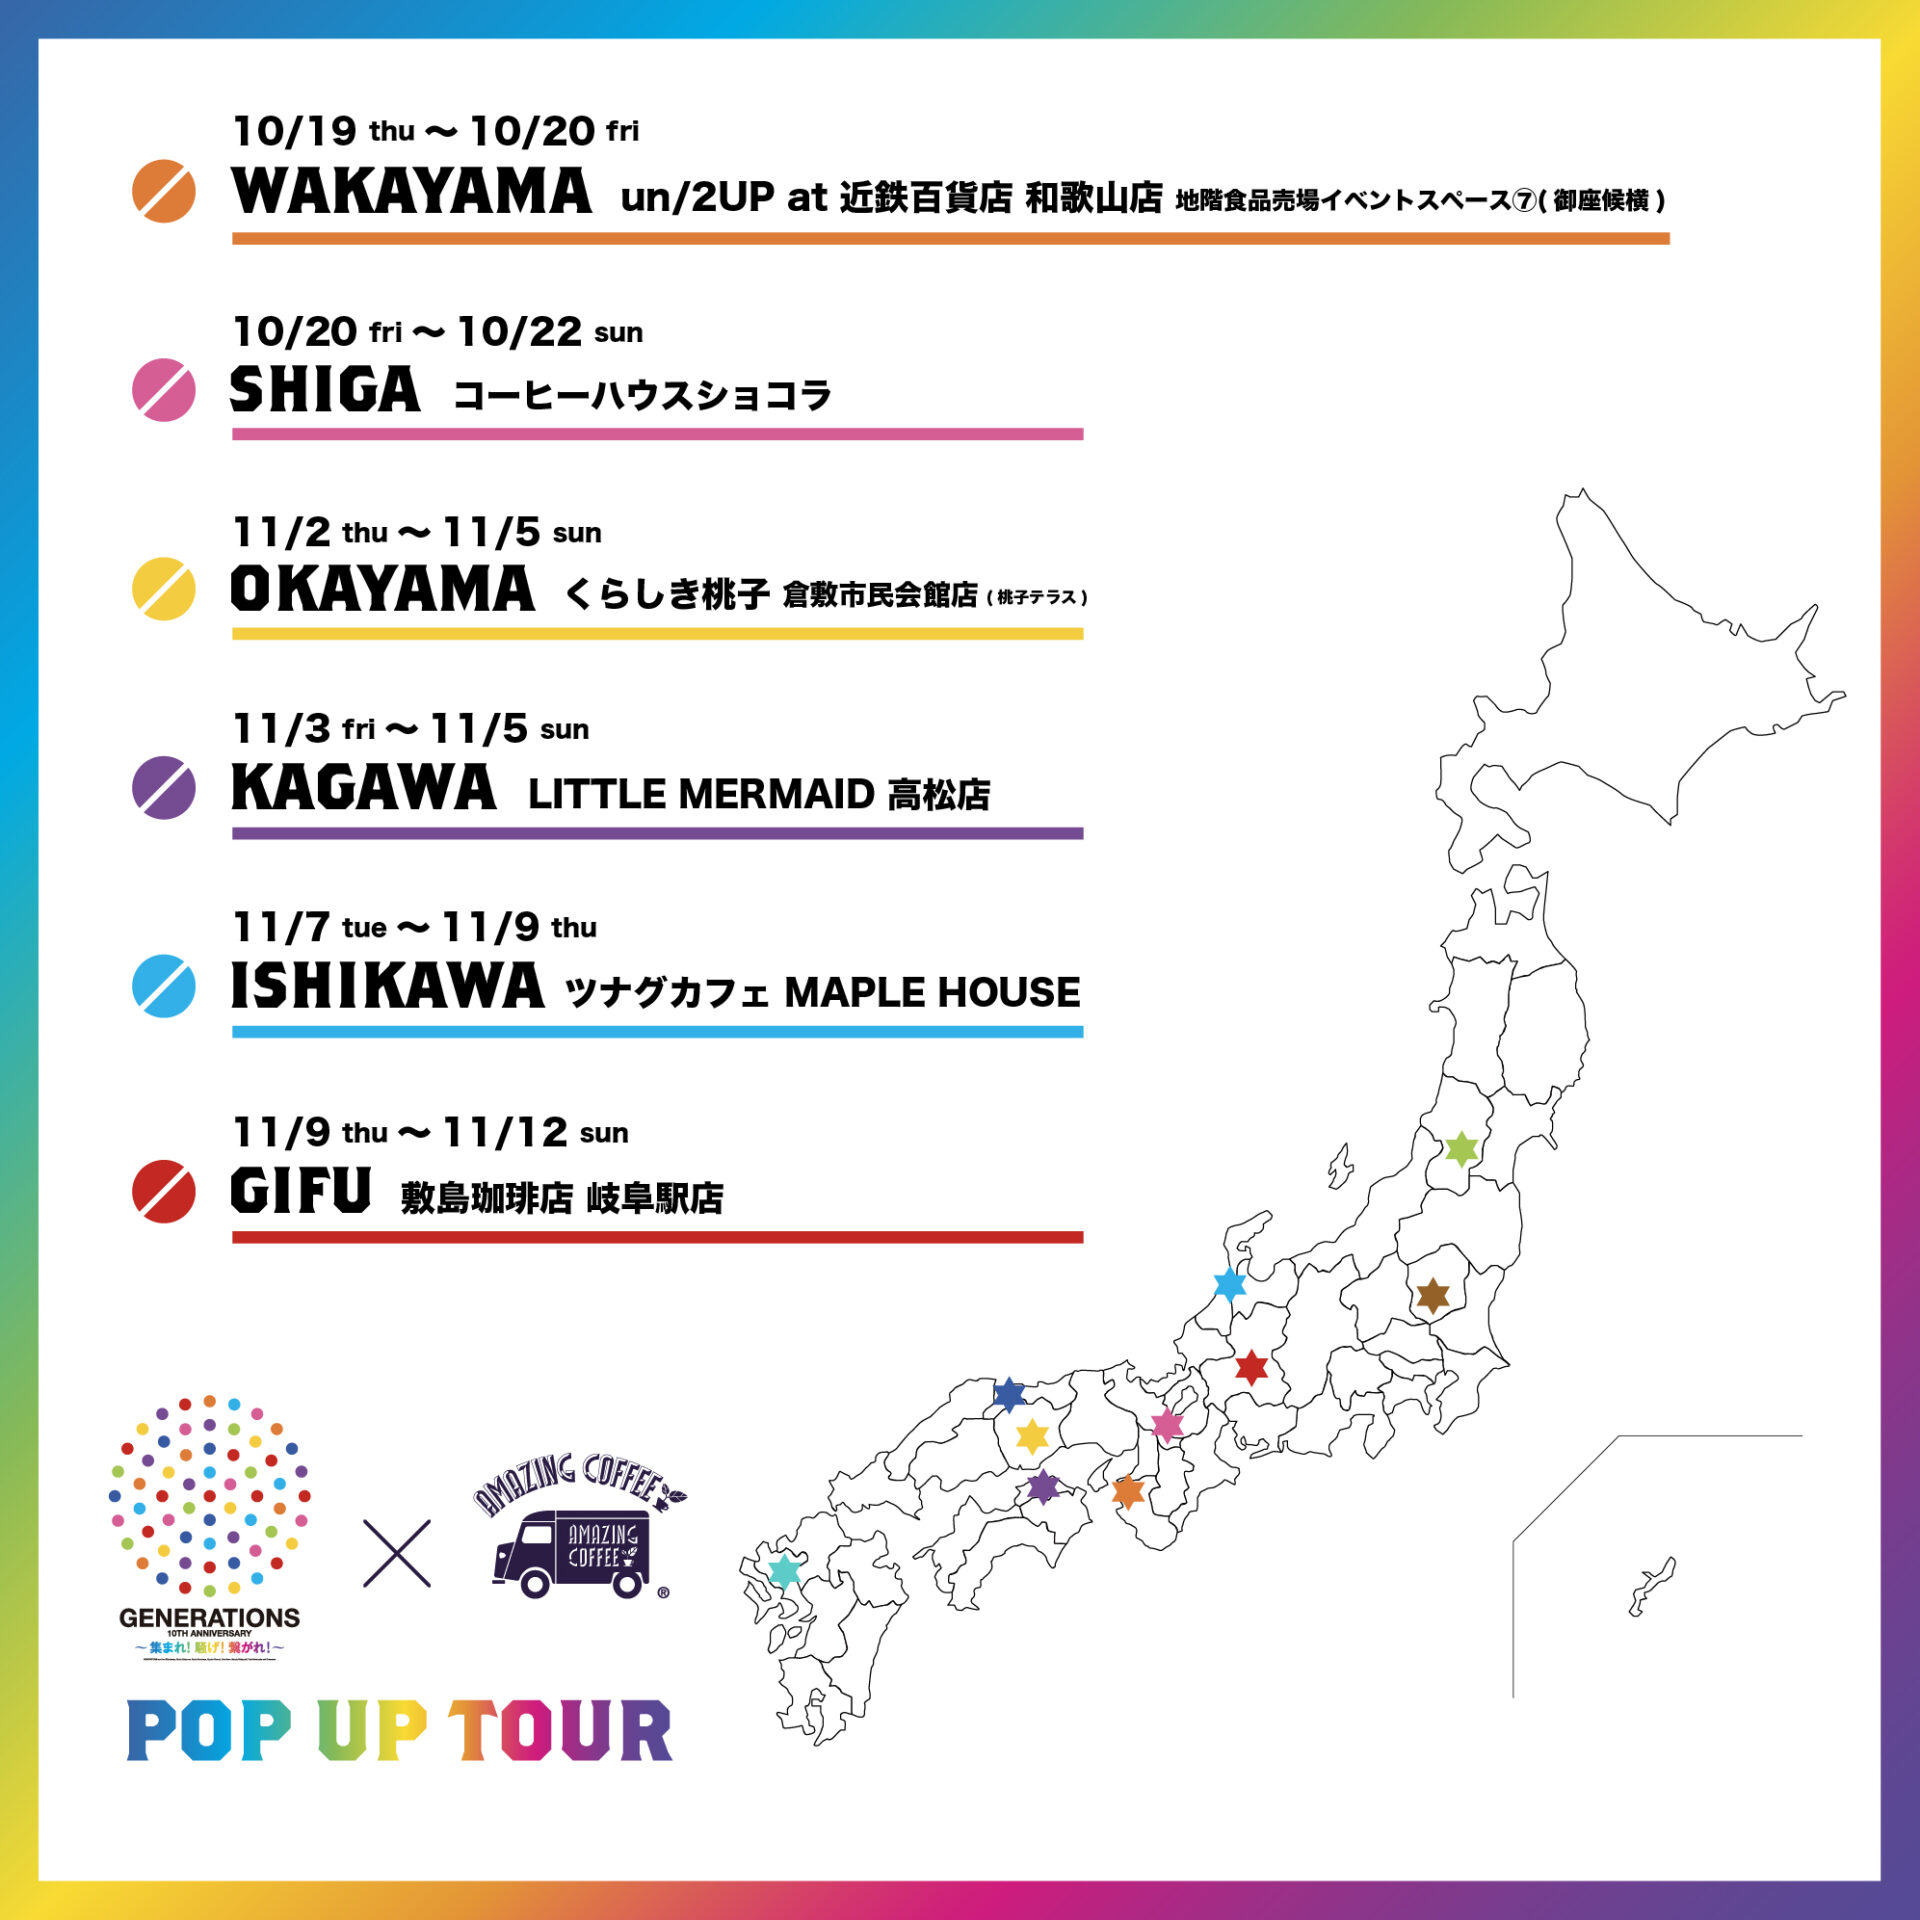 GENERATIONS×AMAZING COFFEE  POP UP TOUR in KAGAWA  / リトルマーメイド高松店にて開催決定！のイメージ画像